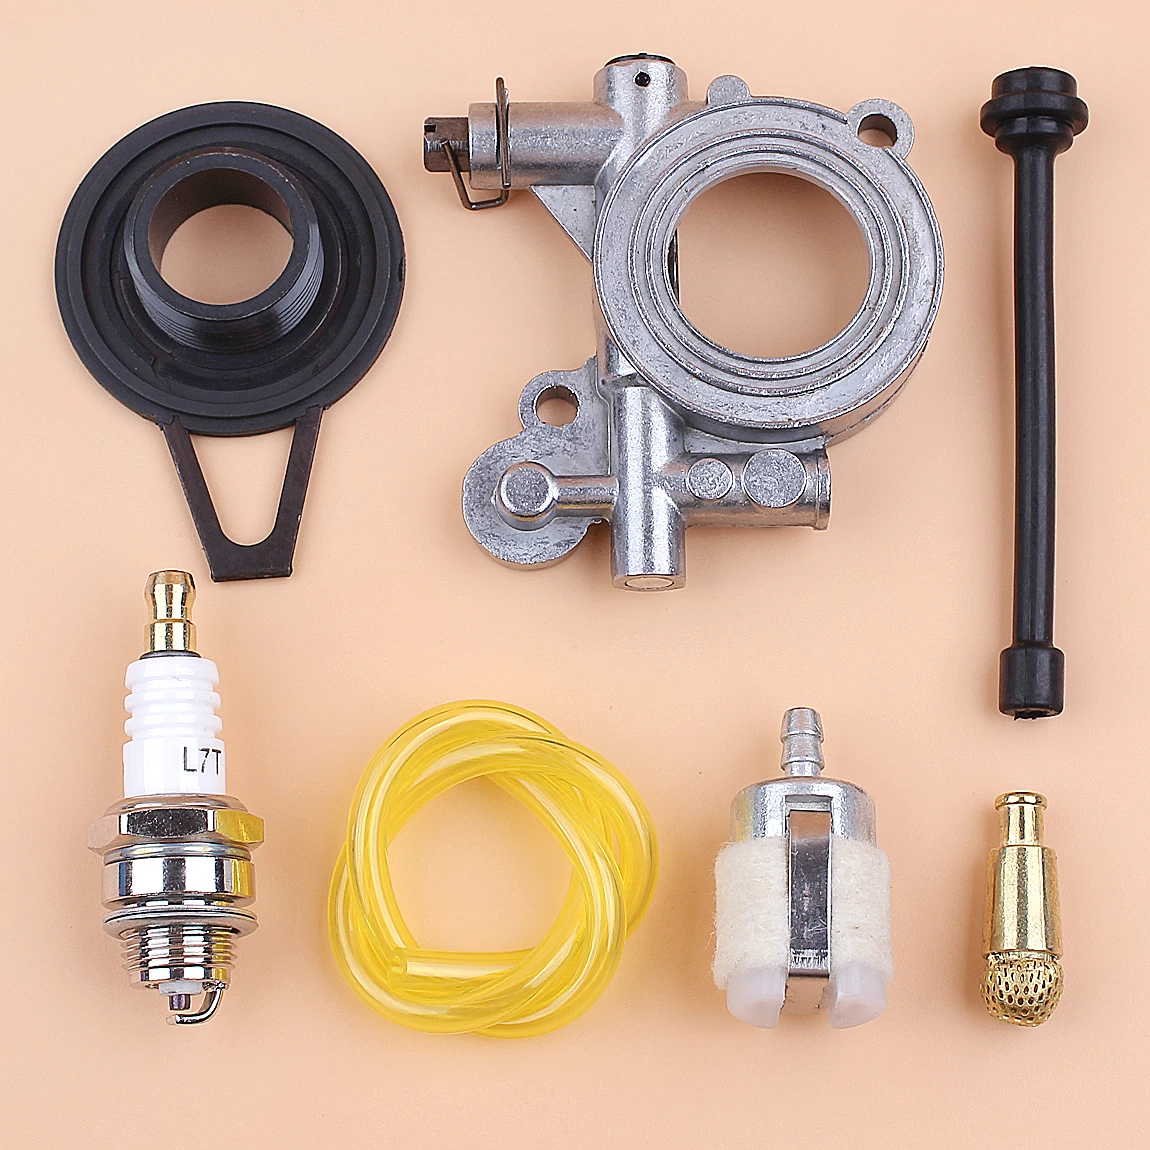 

Oil Pump Worm Gear w/ Fuel Oil Line Hose Filter Kit For Husqvarna 365 362 371 XP 372 372XP Chainsaw 503 52 13-01 / 503 75 61-02